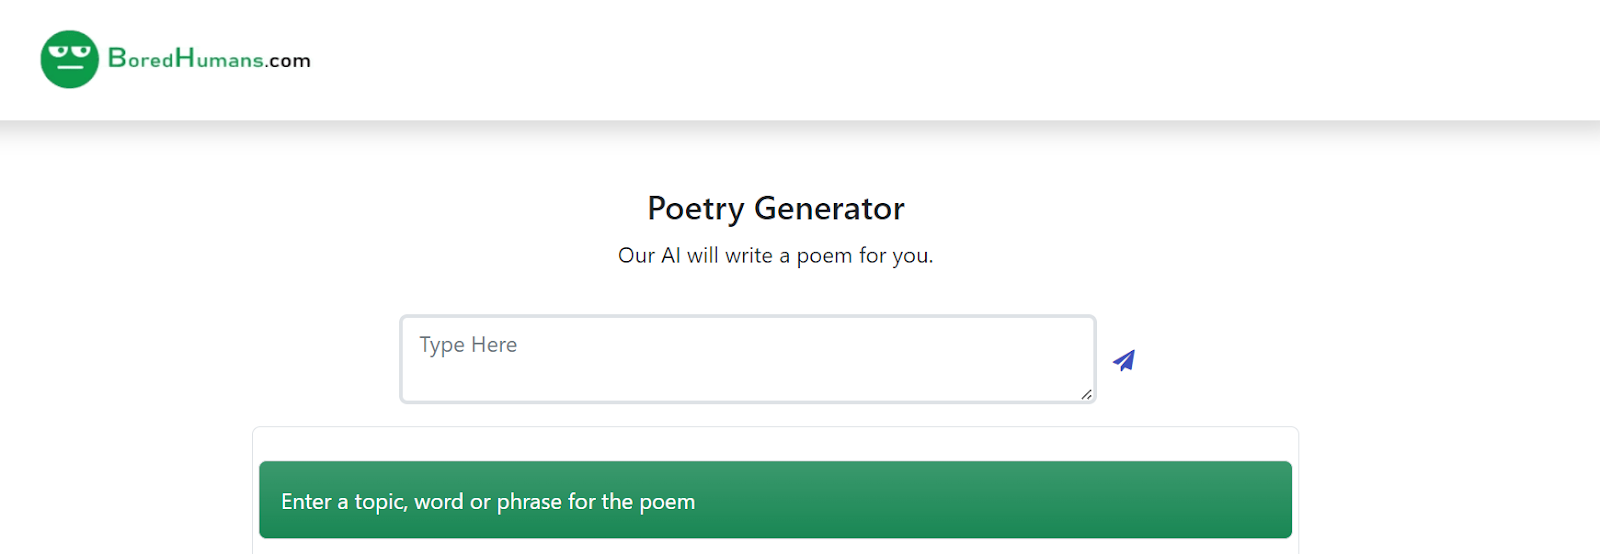 Bored Humans Poetry Generator